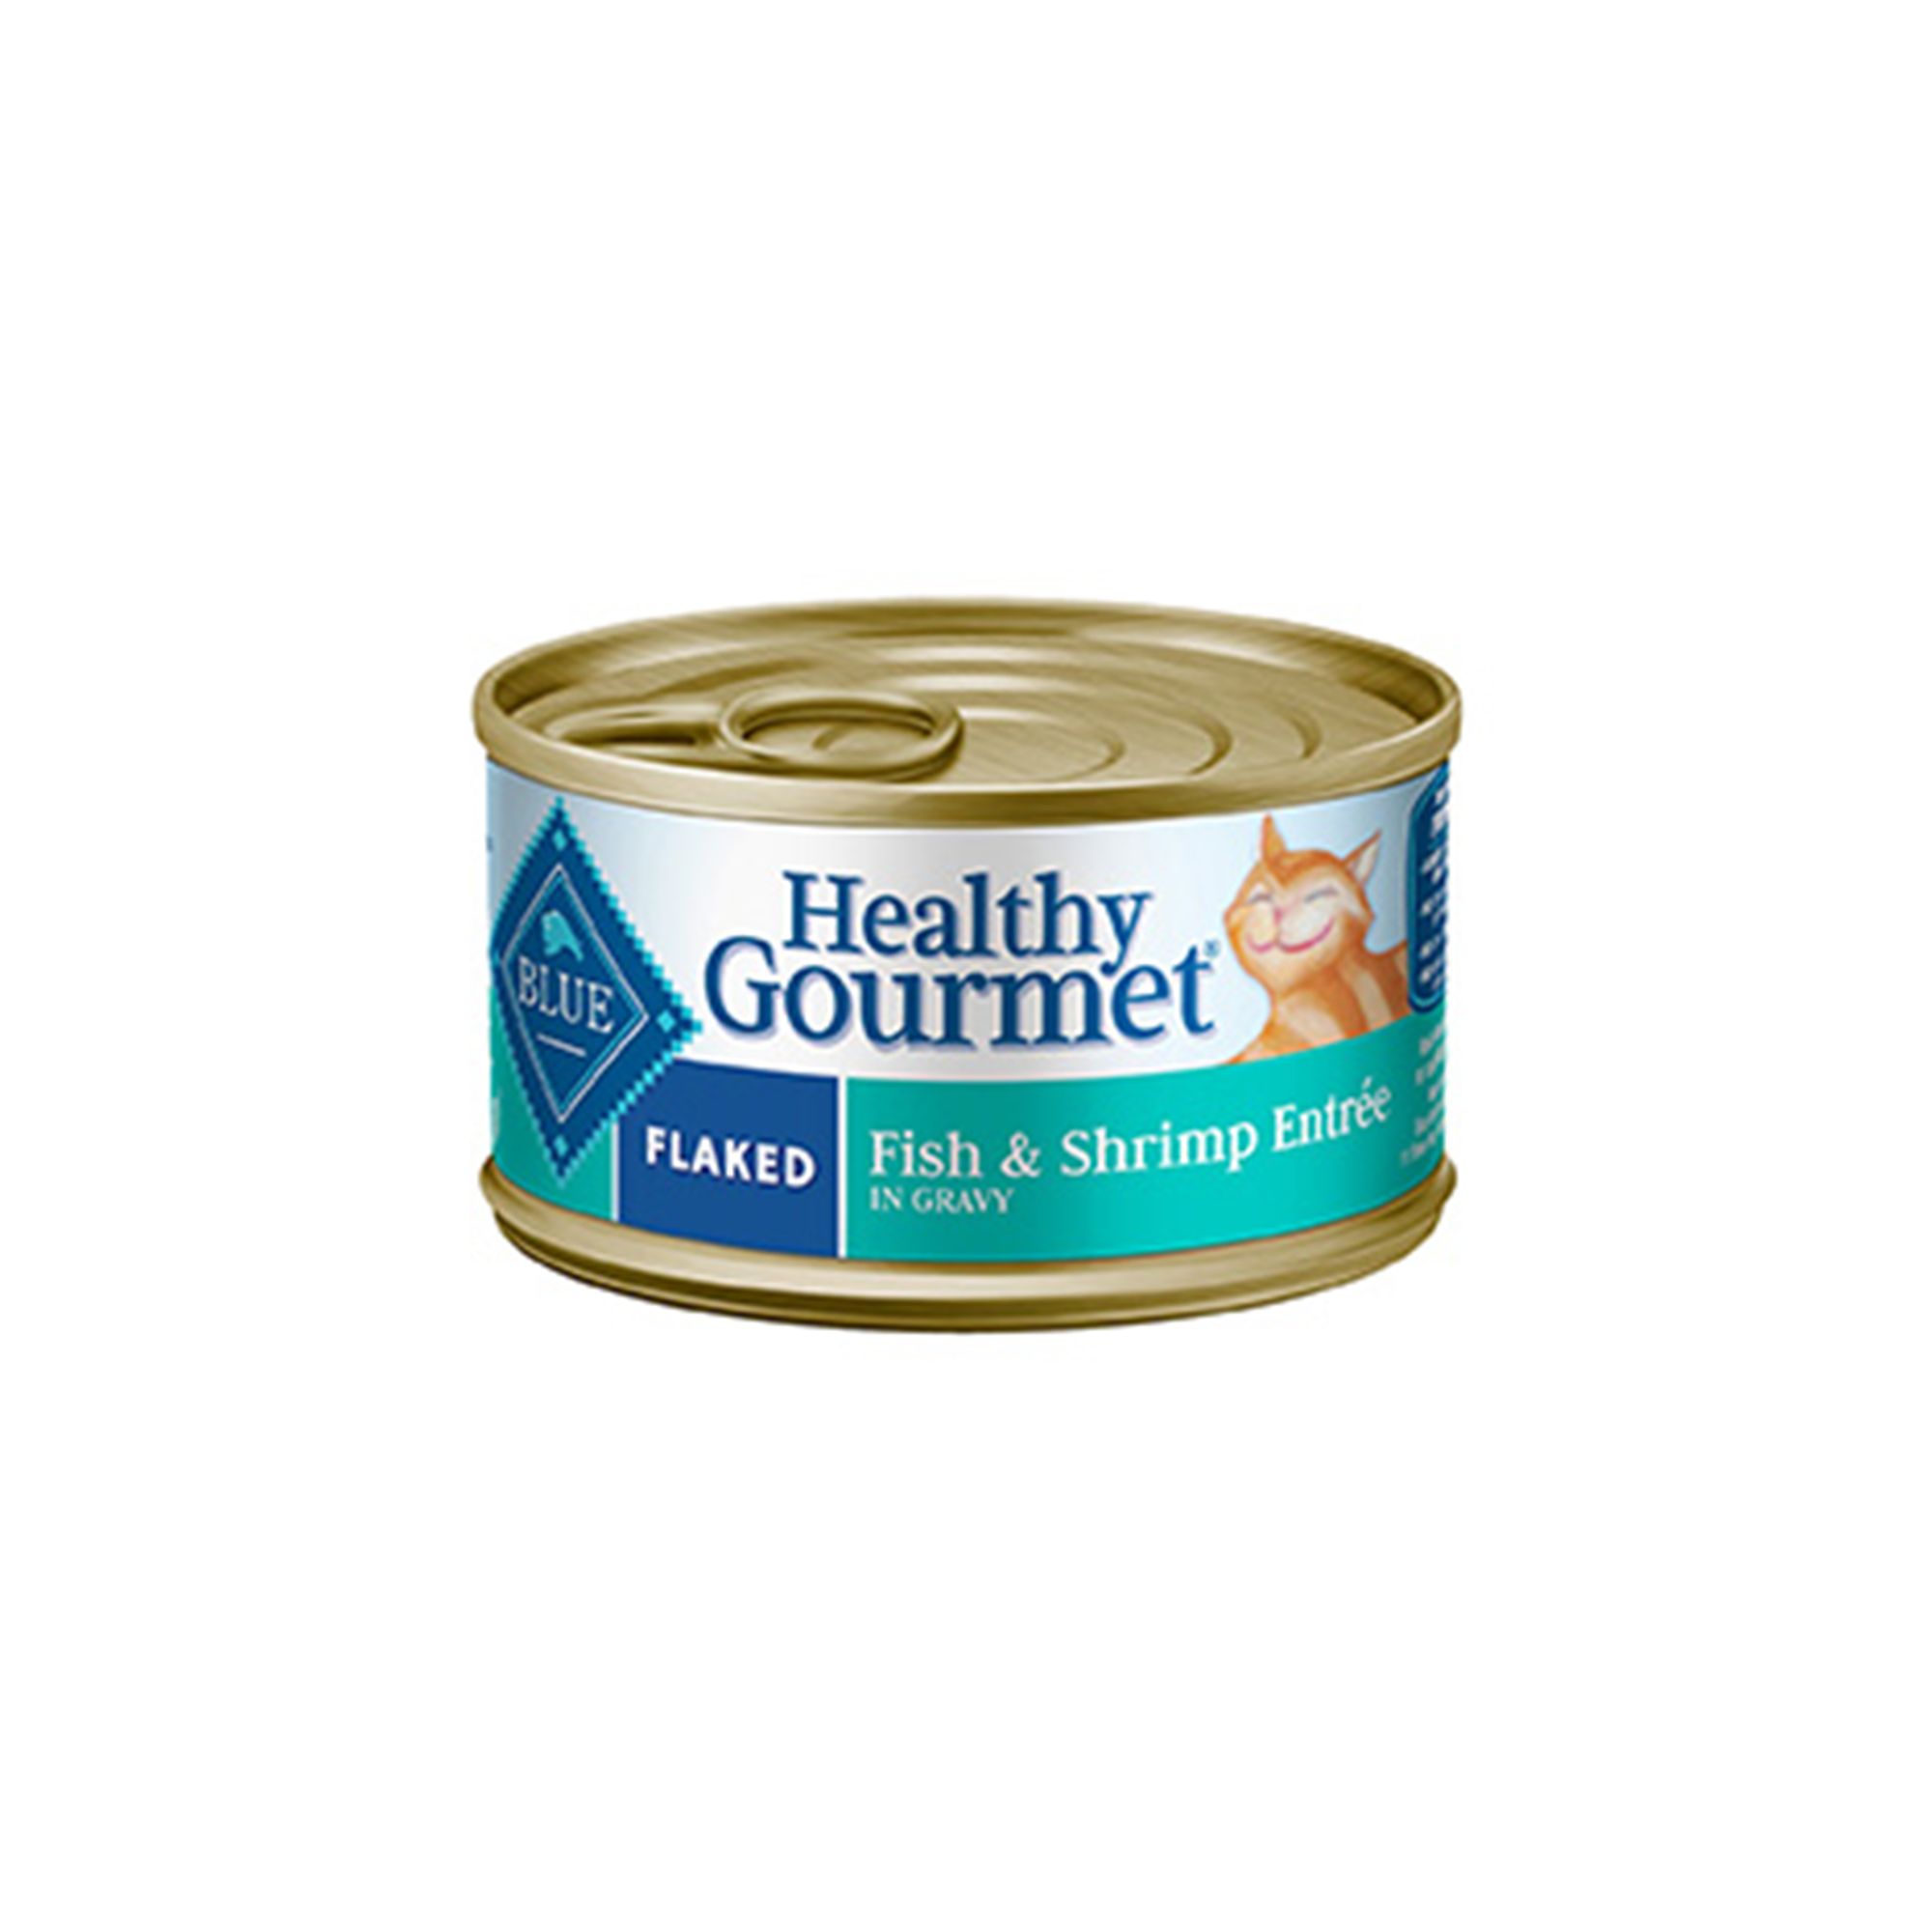 Blue Healthy Gourmet Cat Food Calories